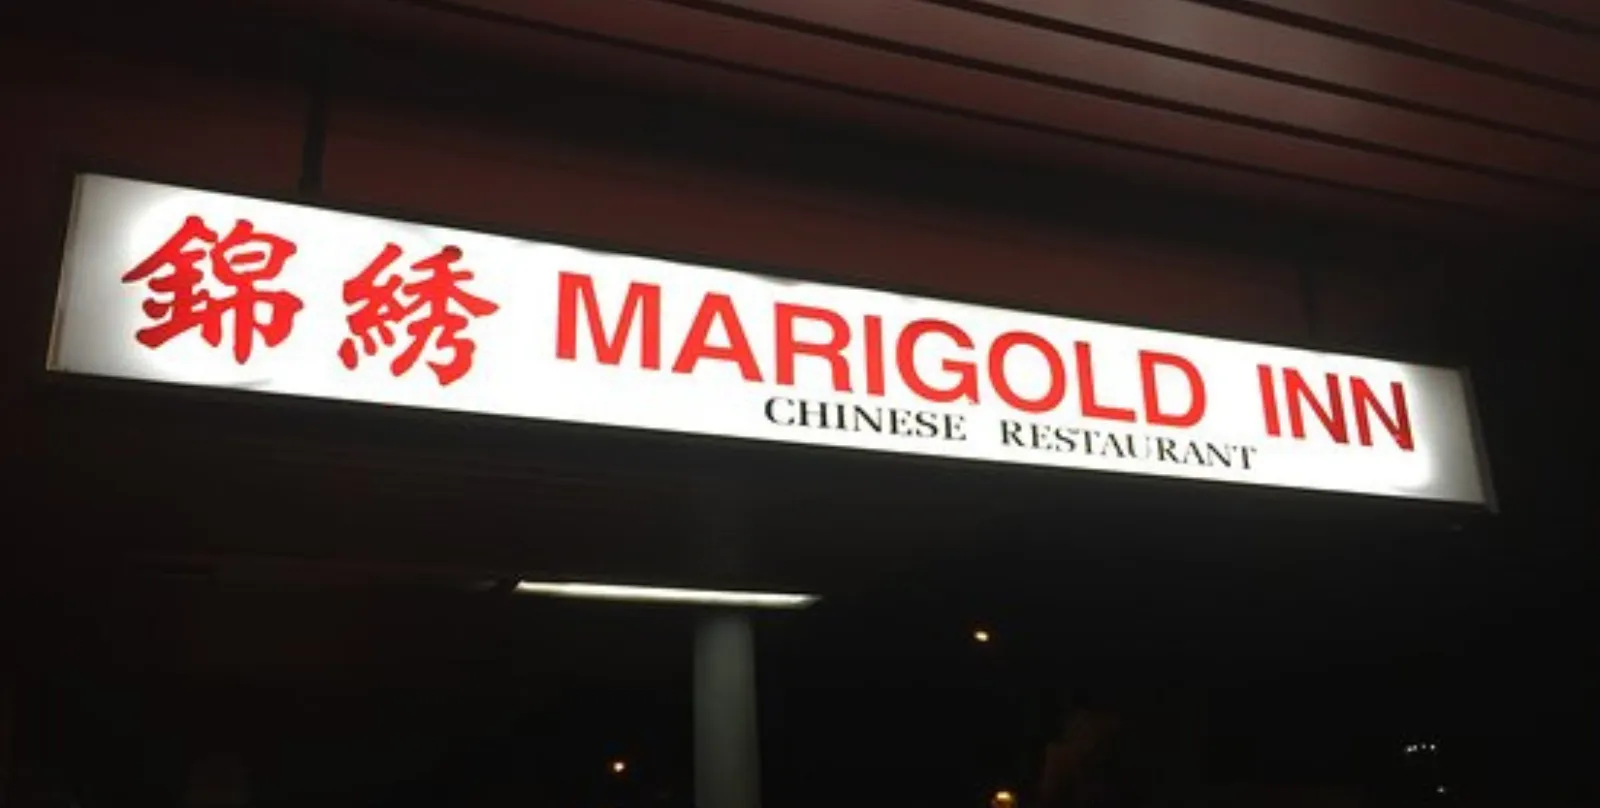 Marigold Inn Menu Prices in Australia